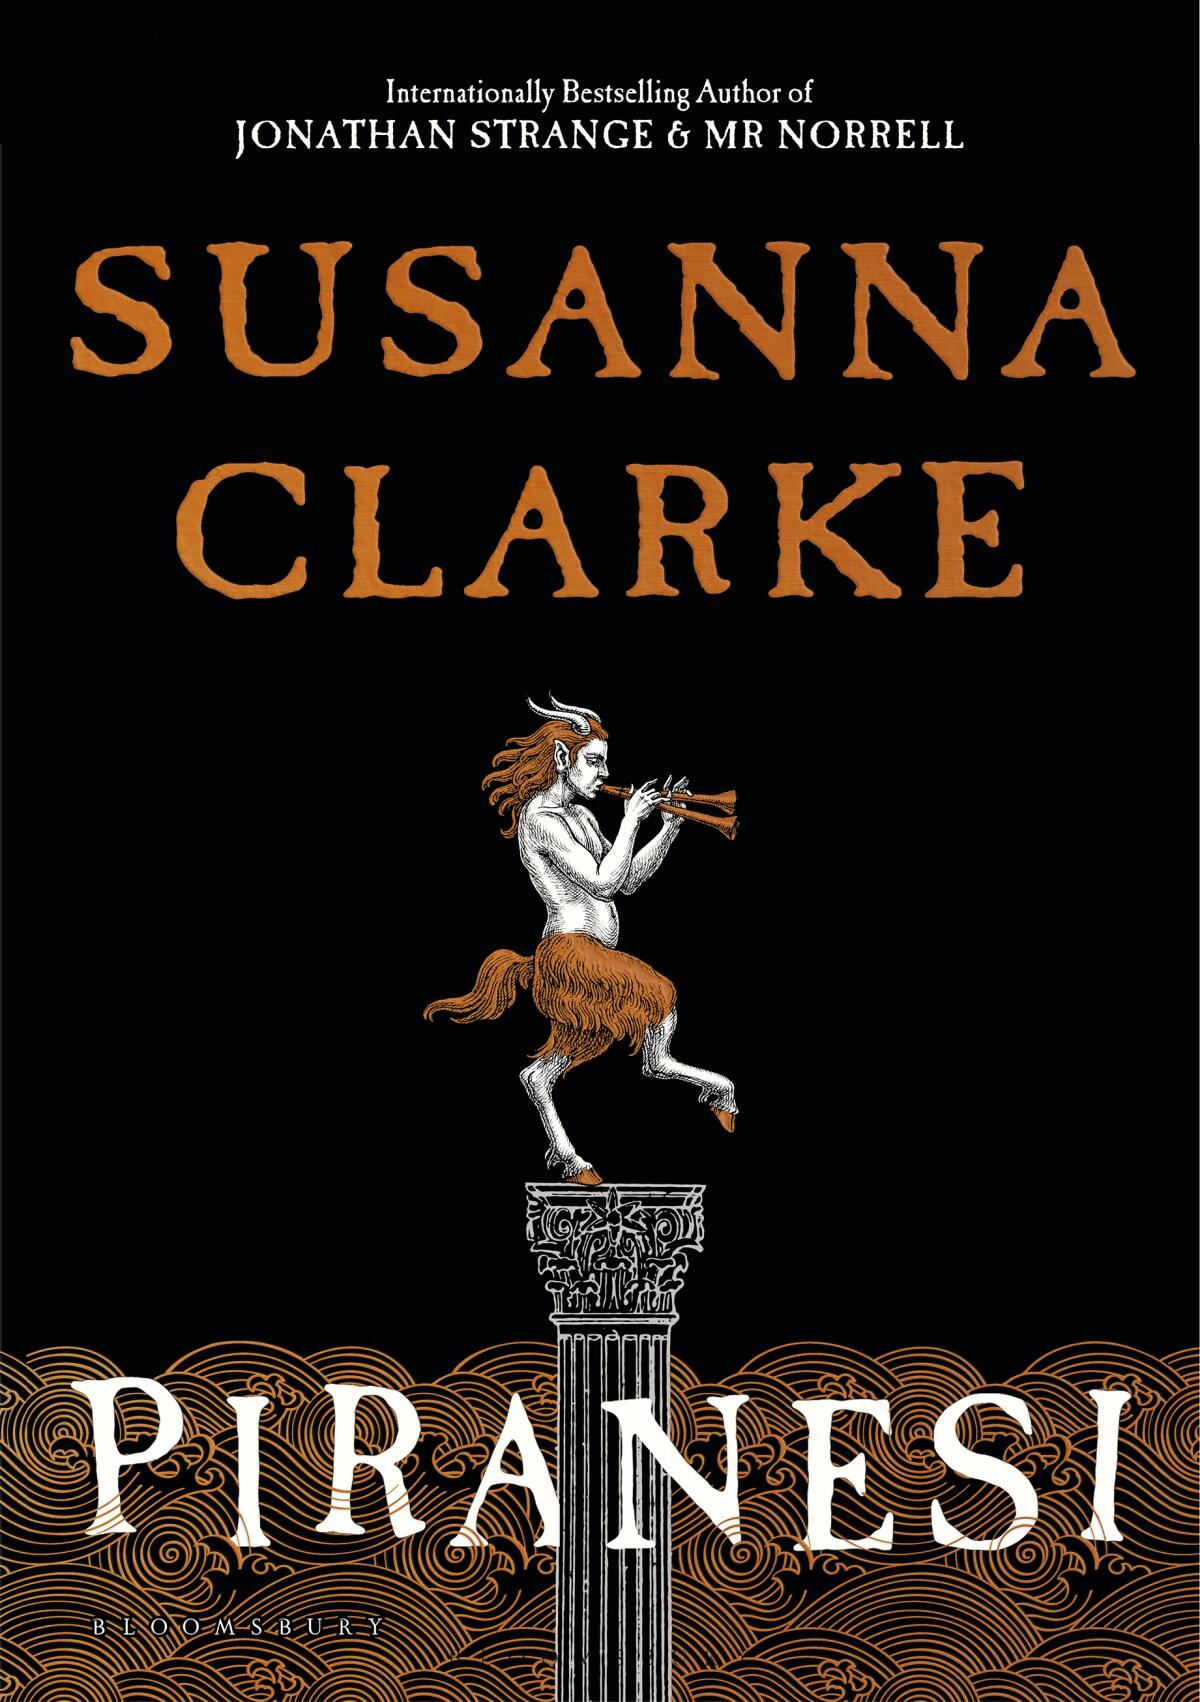 Book jacket for "Piranesi" by Susanna Clarke.